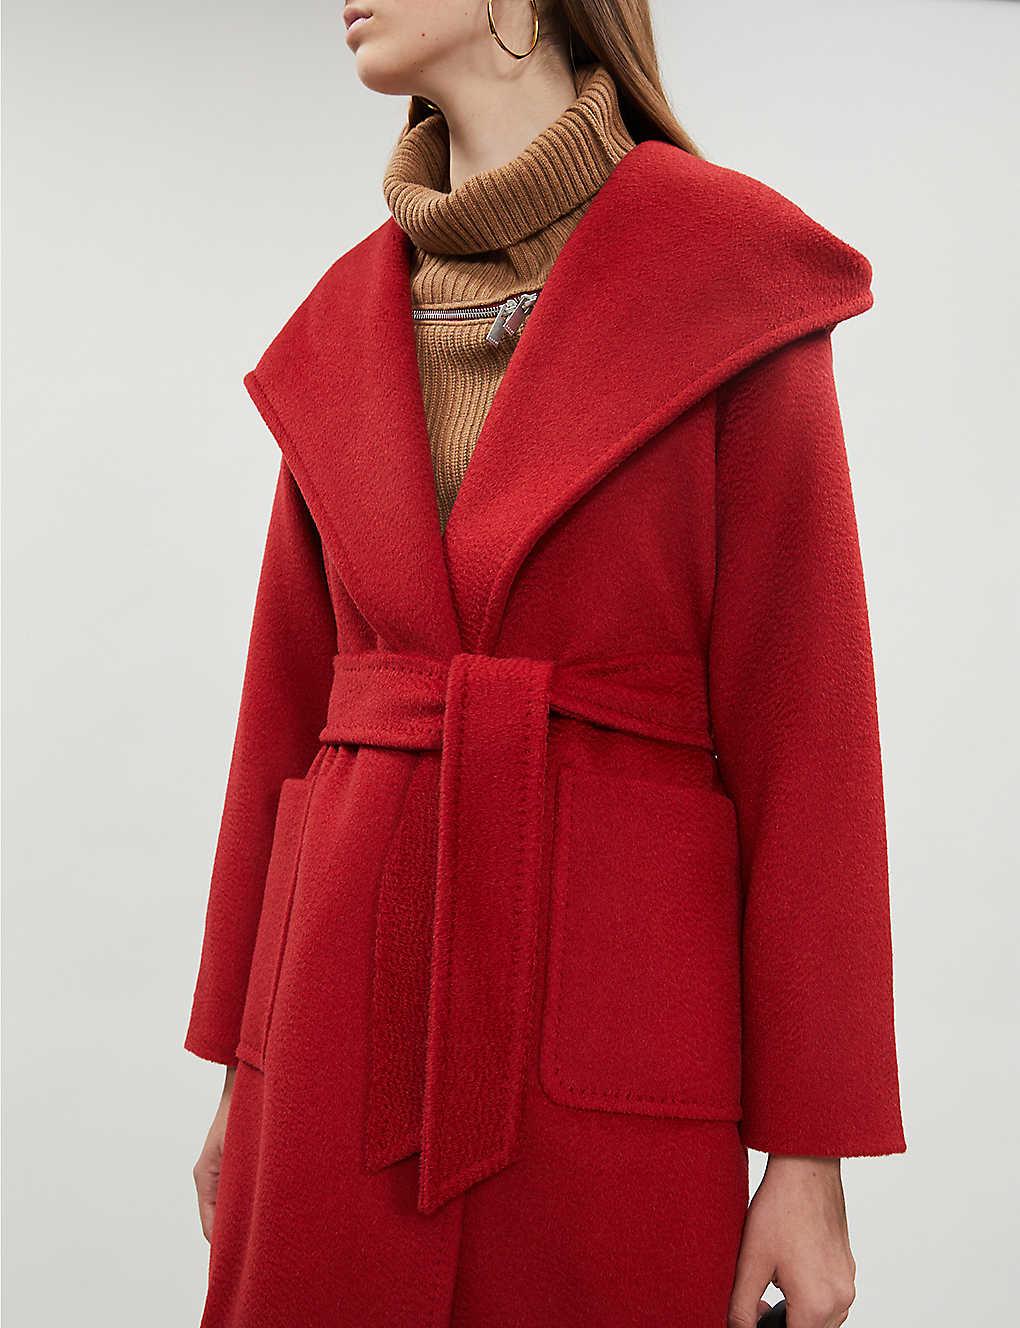 Max Mara Rialto Hooded Camel Hair Coat in Red - Lyst